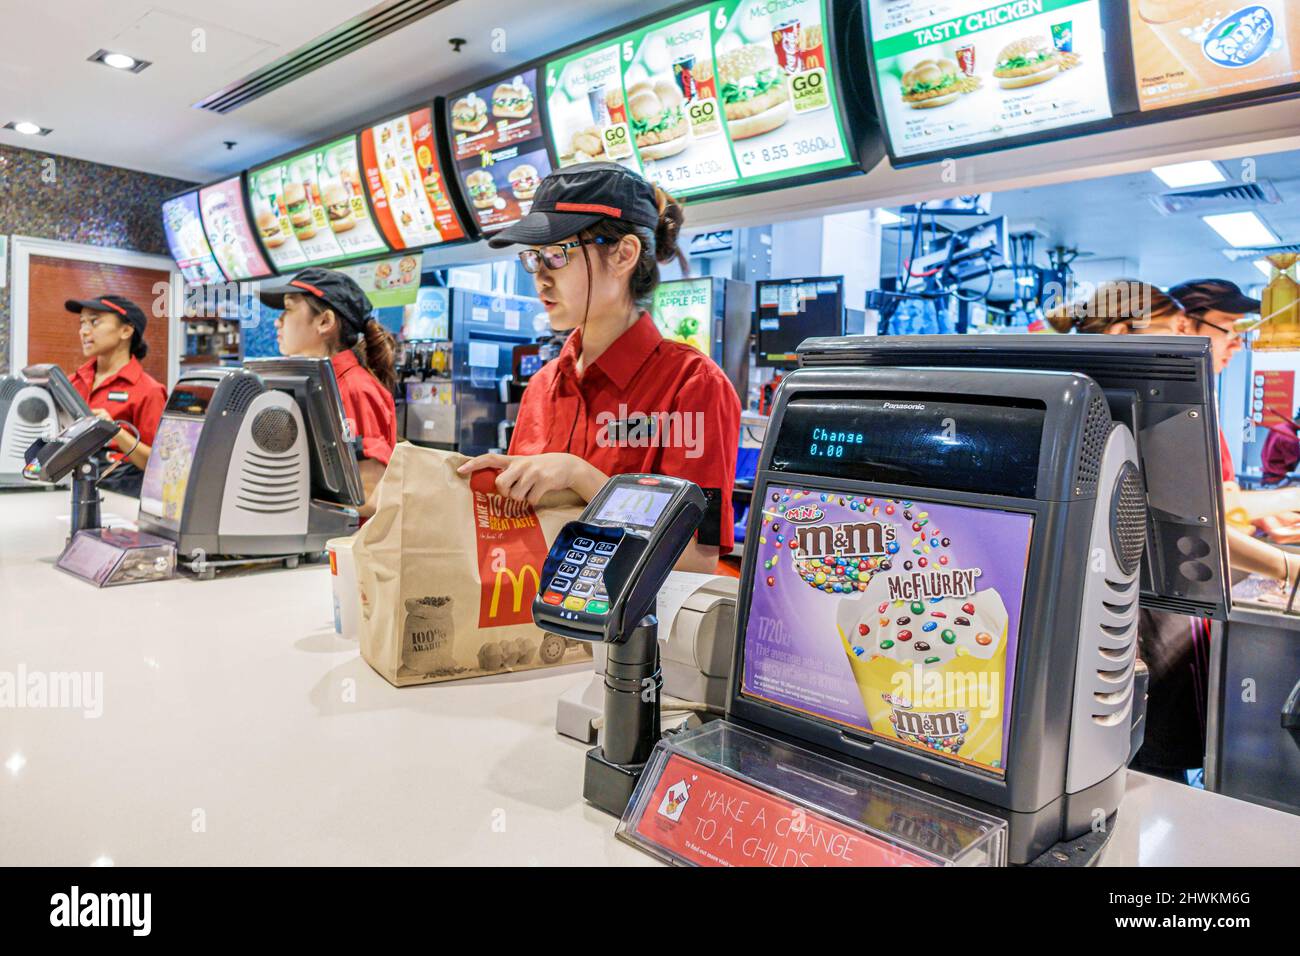 Sydney Australia,Circular Quay McDonald's,restaurant fast food counter Asian woman,working uniform employee worker m&m's Stock Photo